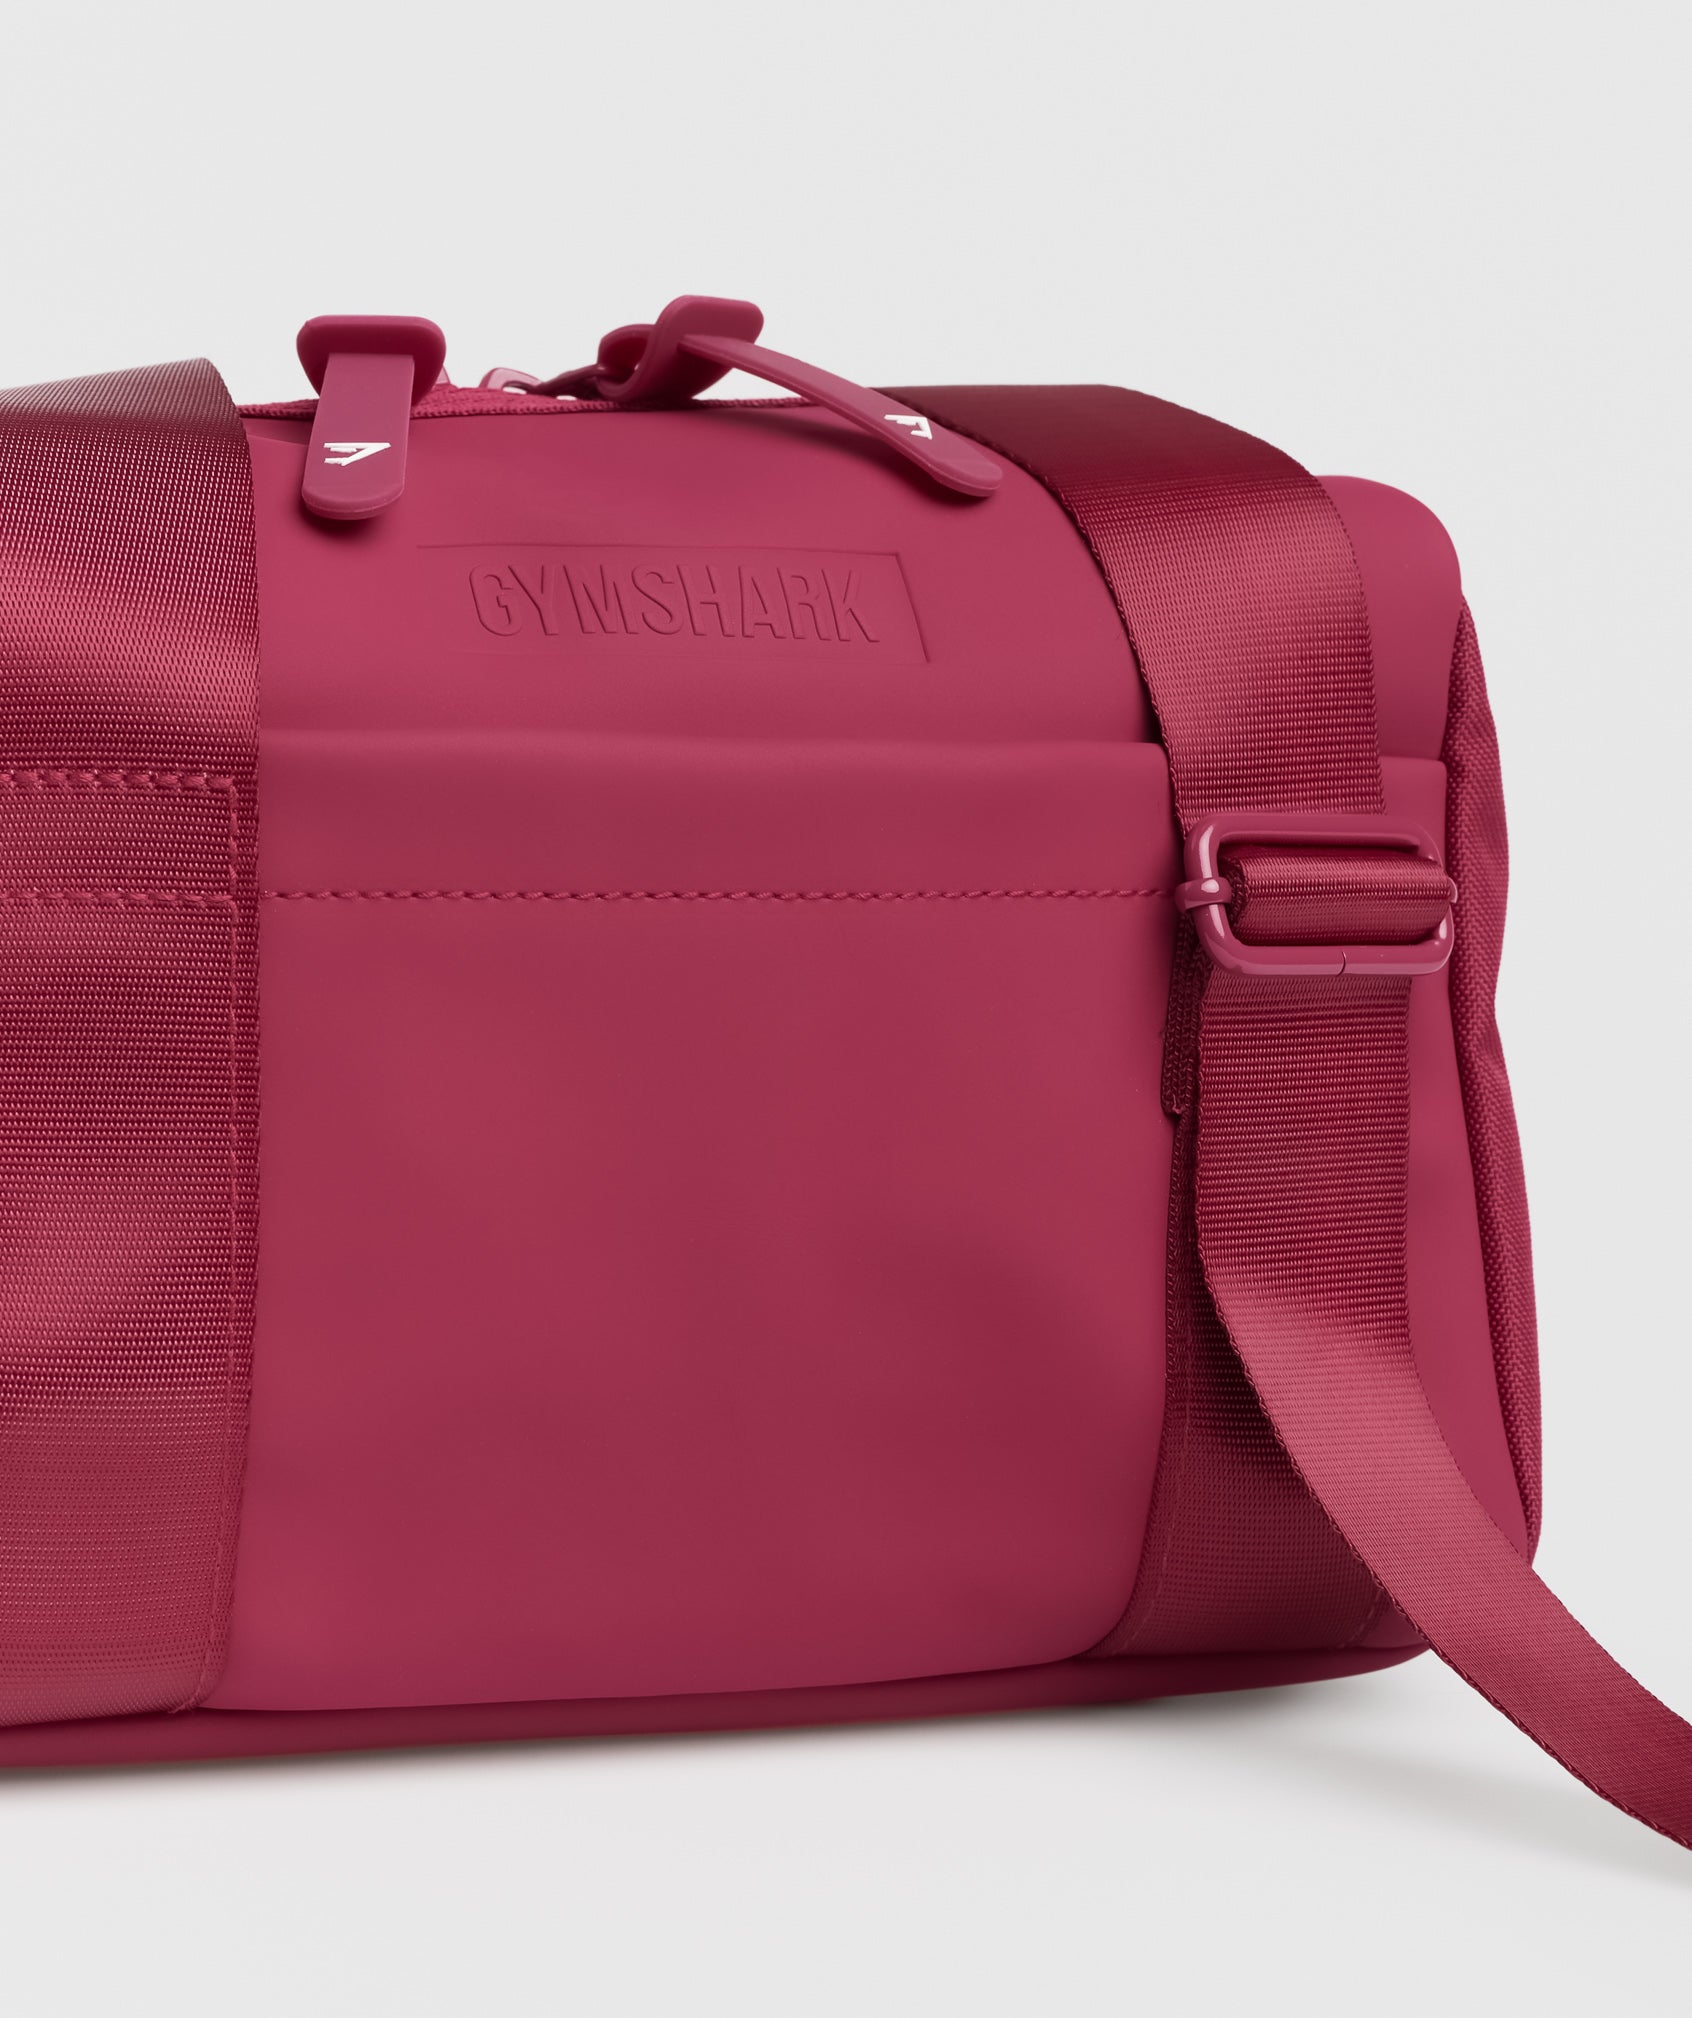 Gymshark Everyday Mini Gym Bag - Raspberry Pink